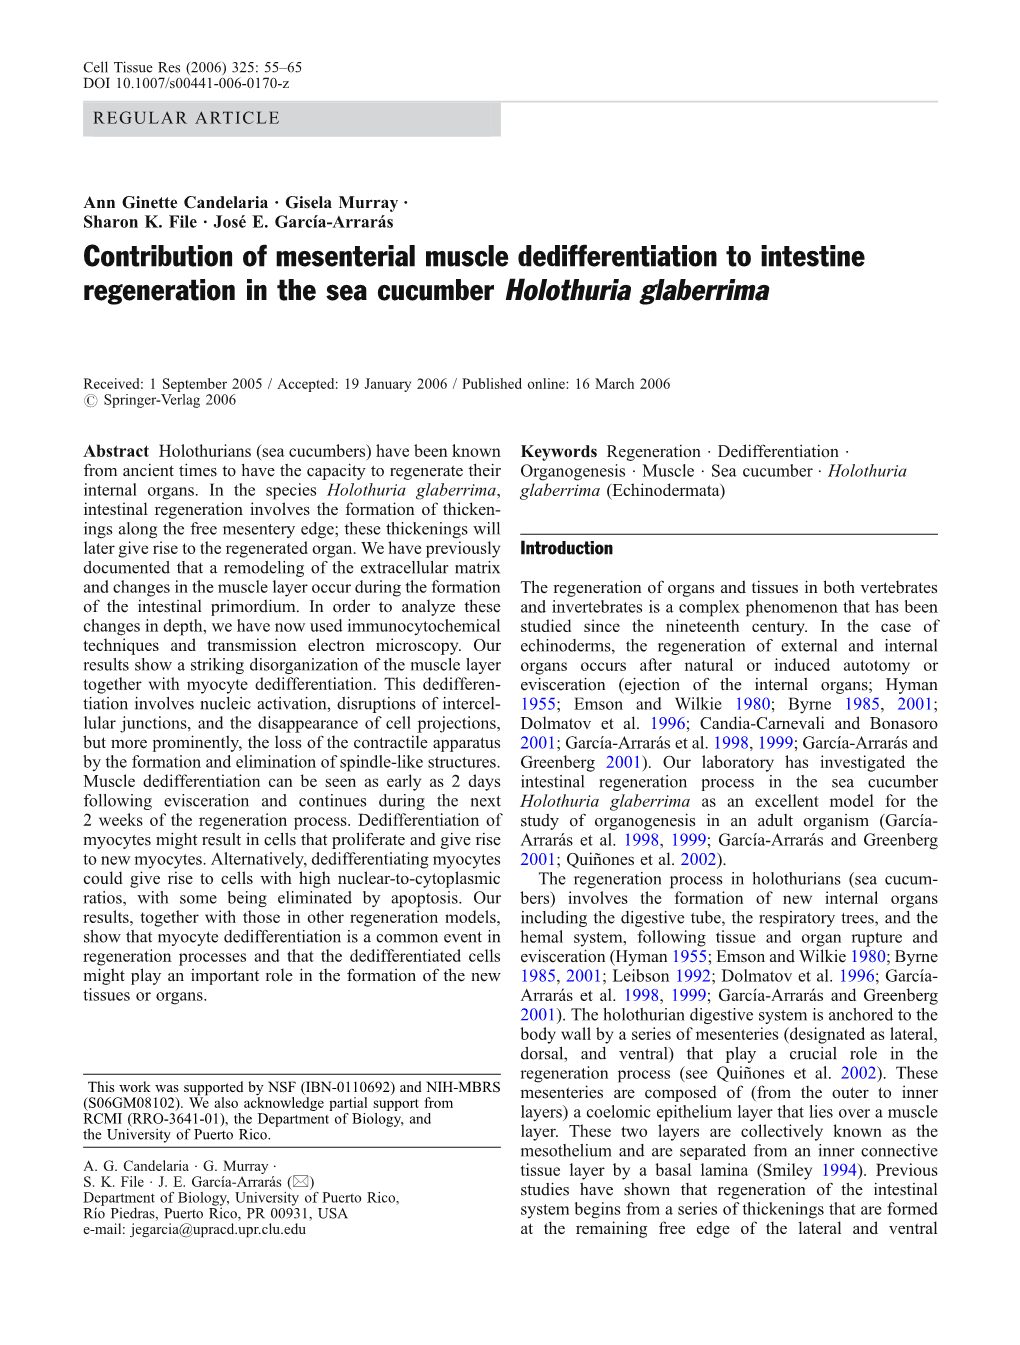 Contribution of Mesenterial Muscle Dedifferentiation to Intestine Regeneration in the Sea Cucumber Holothuria Glaberrima